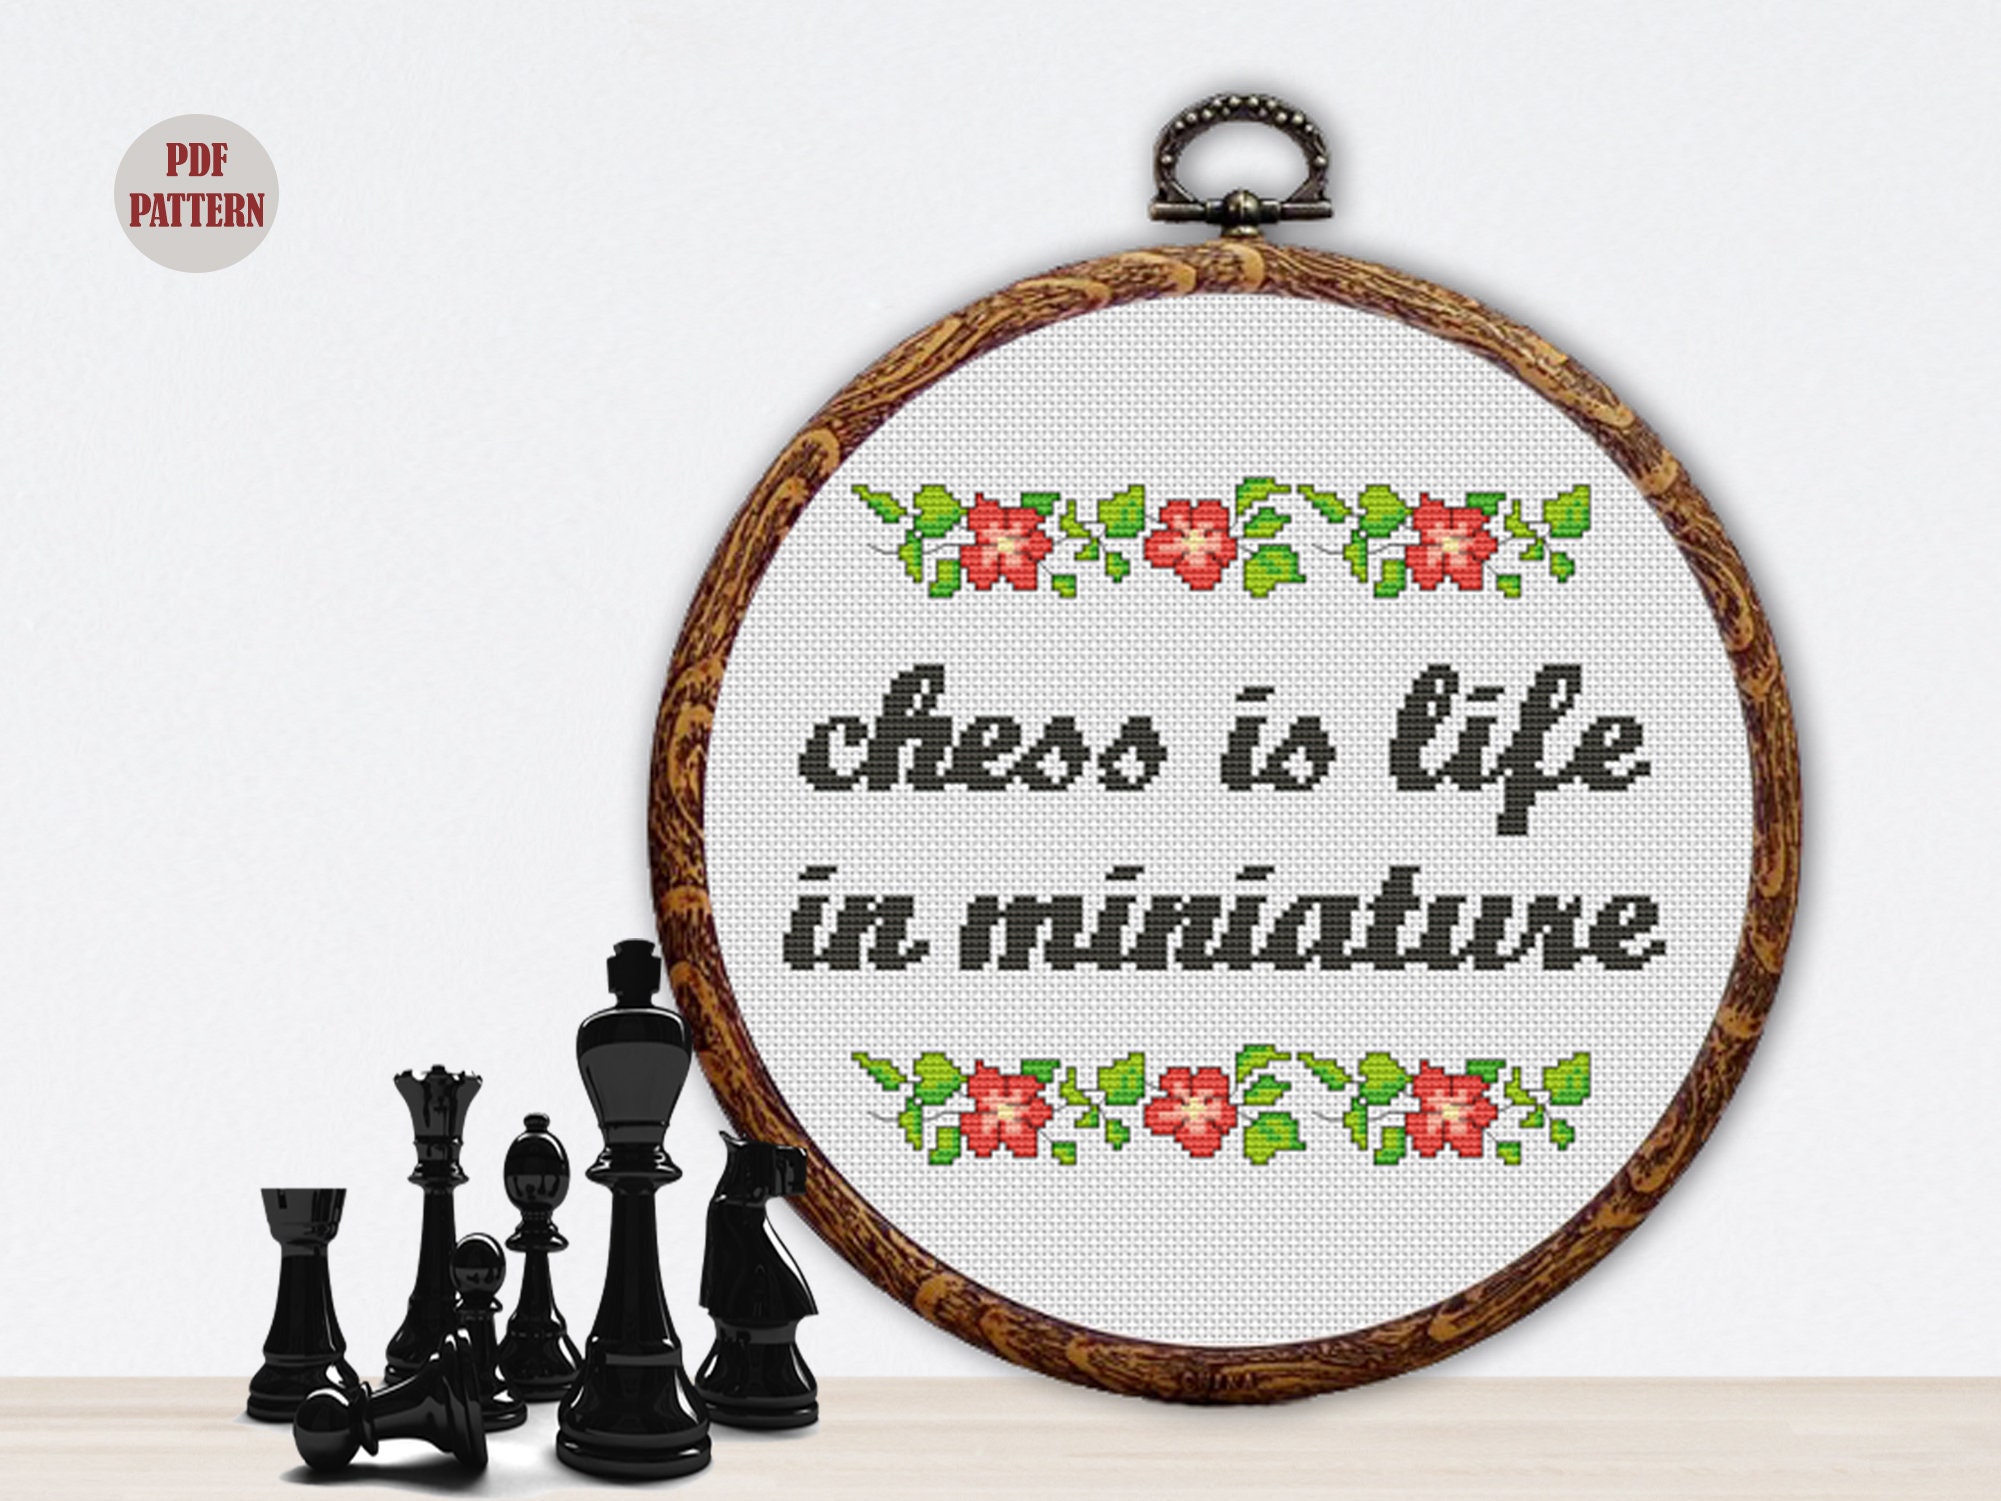 Chess Life, PDF, Chess